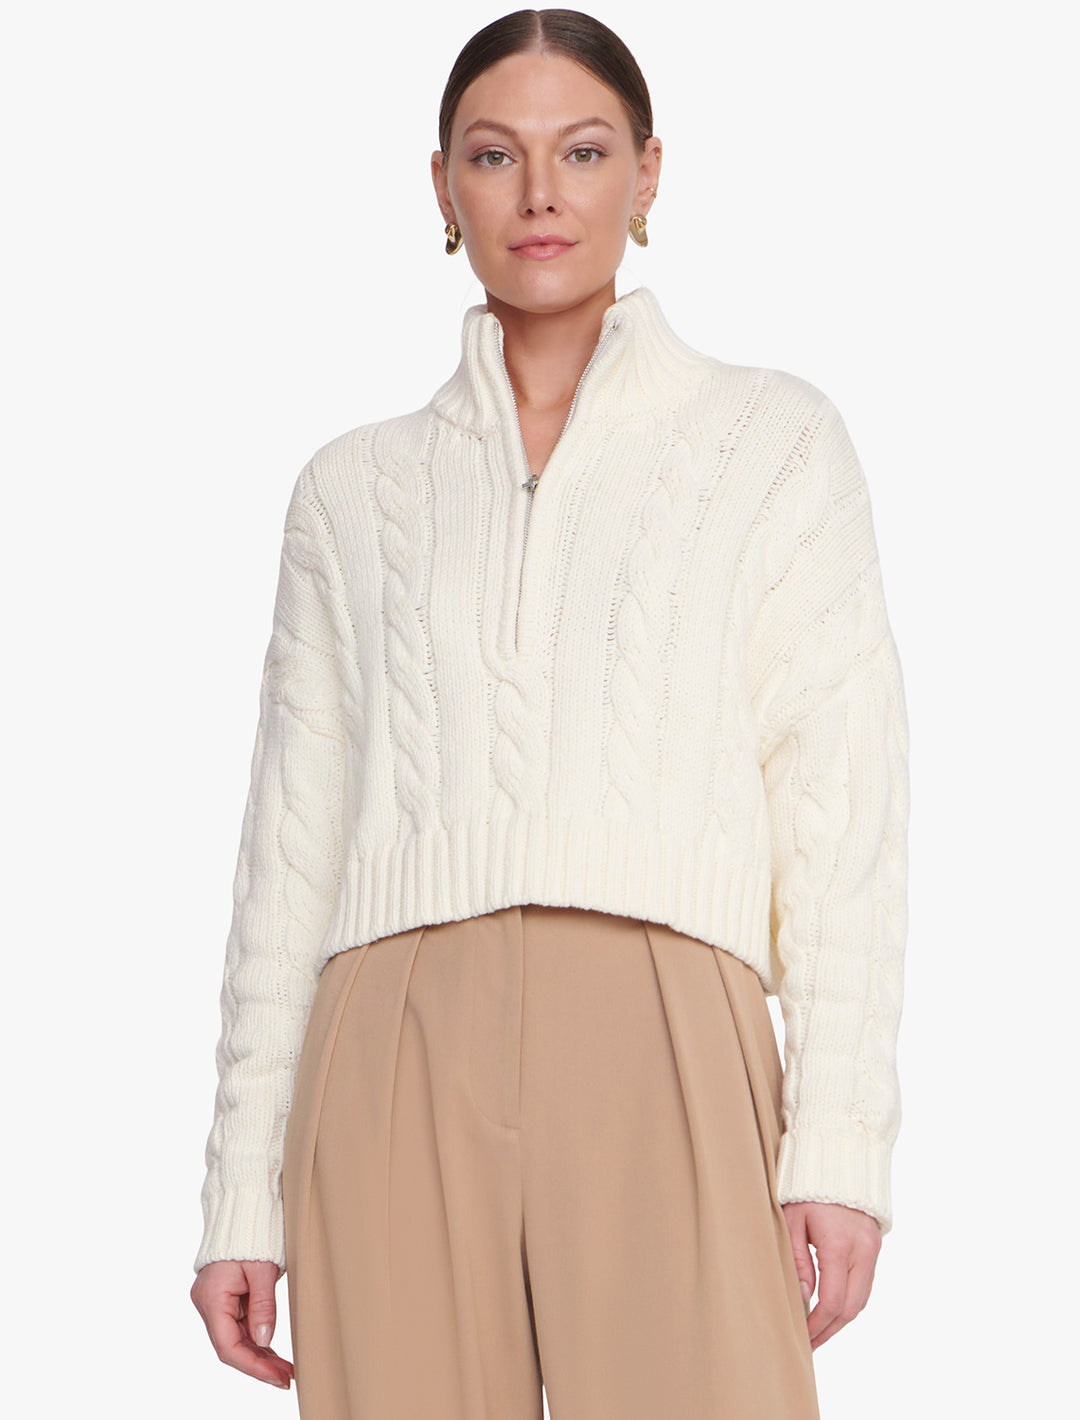 Model wearing STAUD's cropped hampton sweater in ivory.